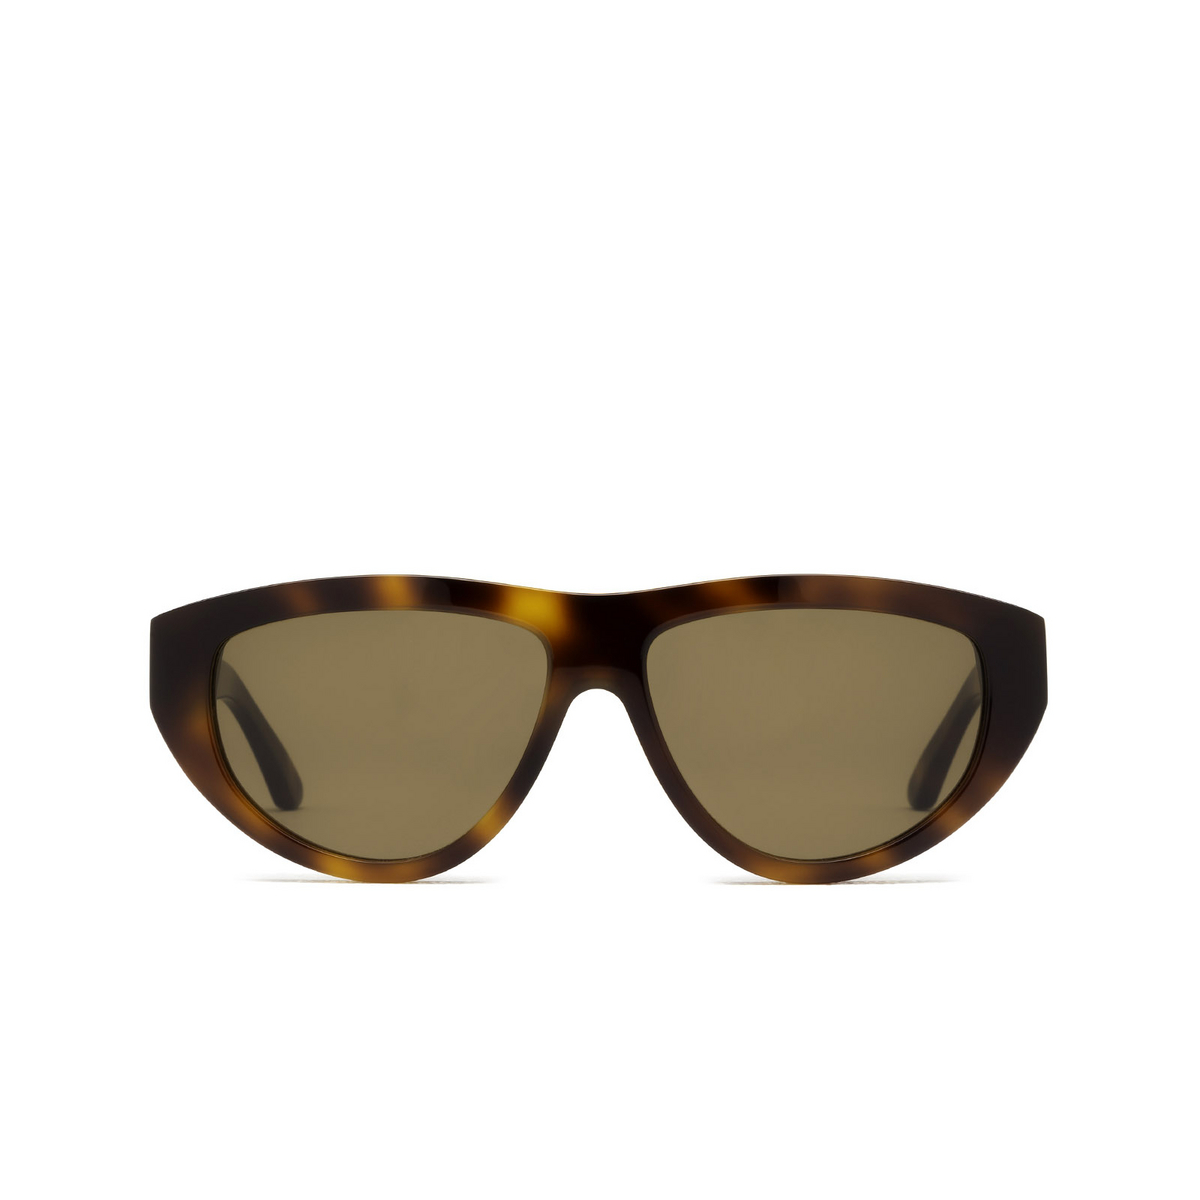 Huma® Oval Sunglasses: Viko color Havana 00 - front view.